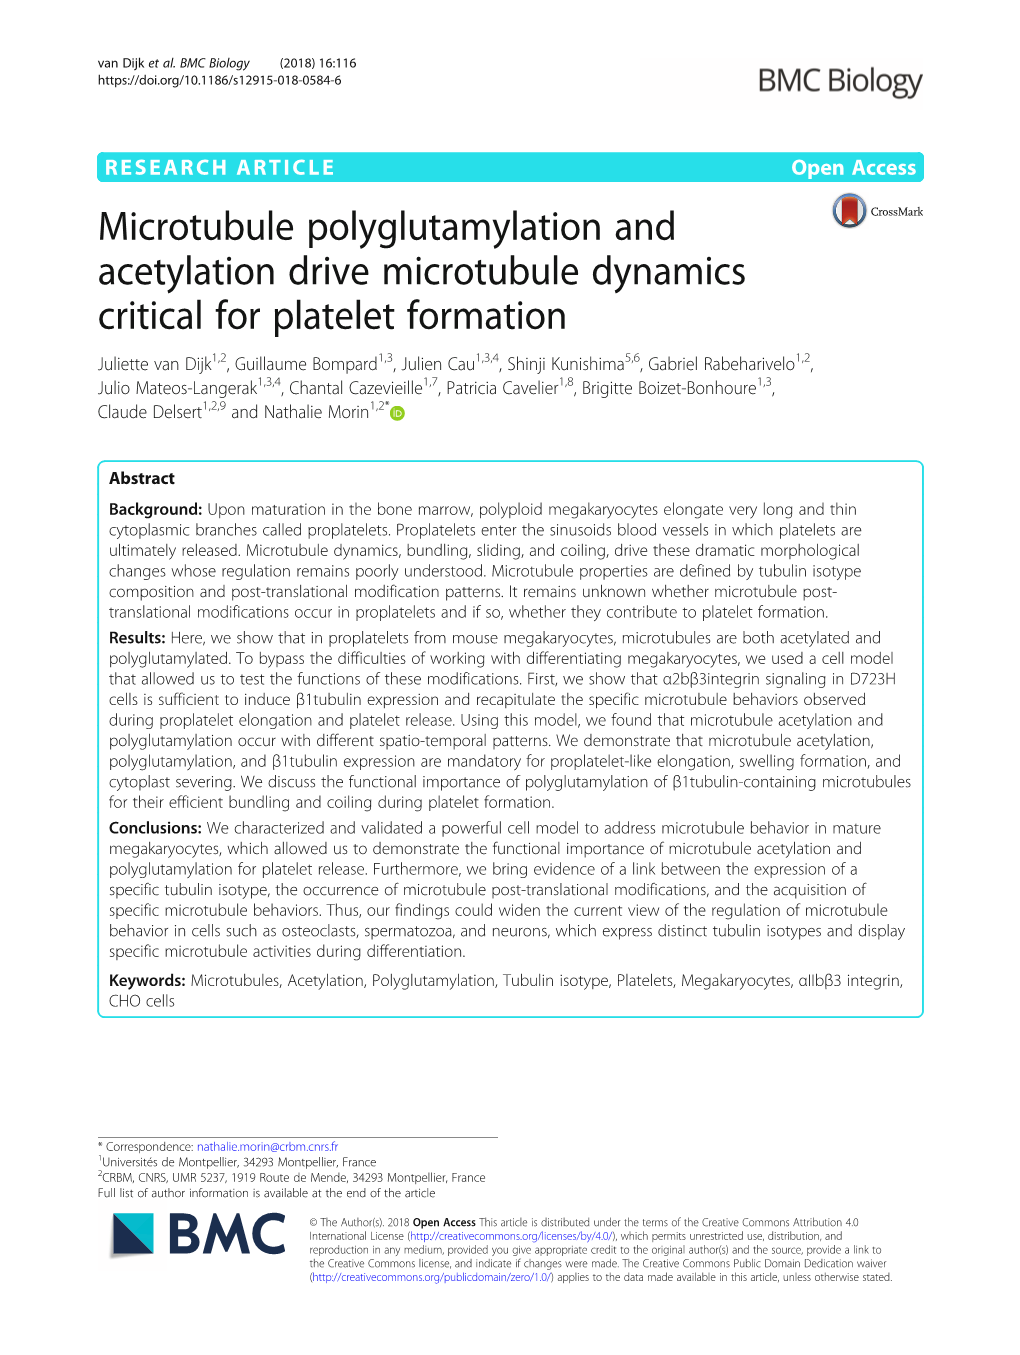 Microtubule Polyglutamylation and Acetylation Drive Microtubule